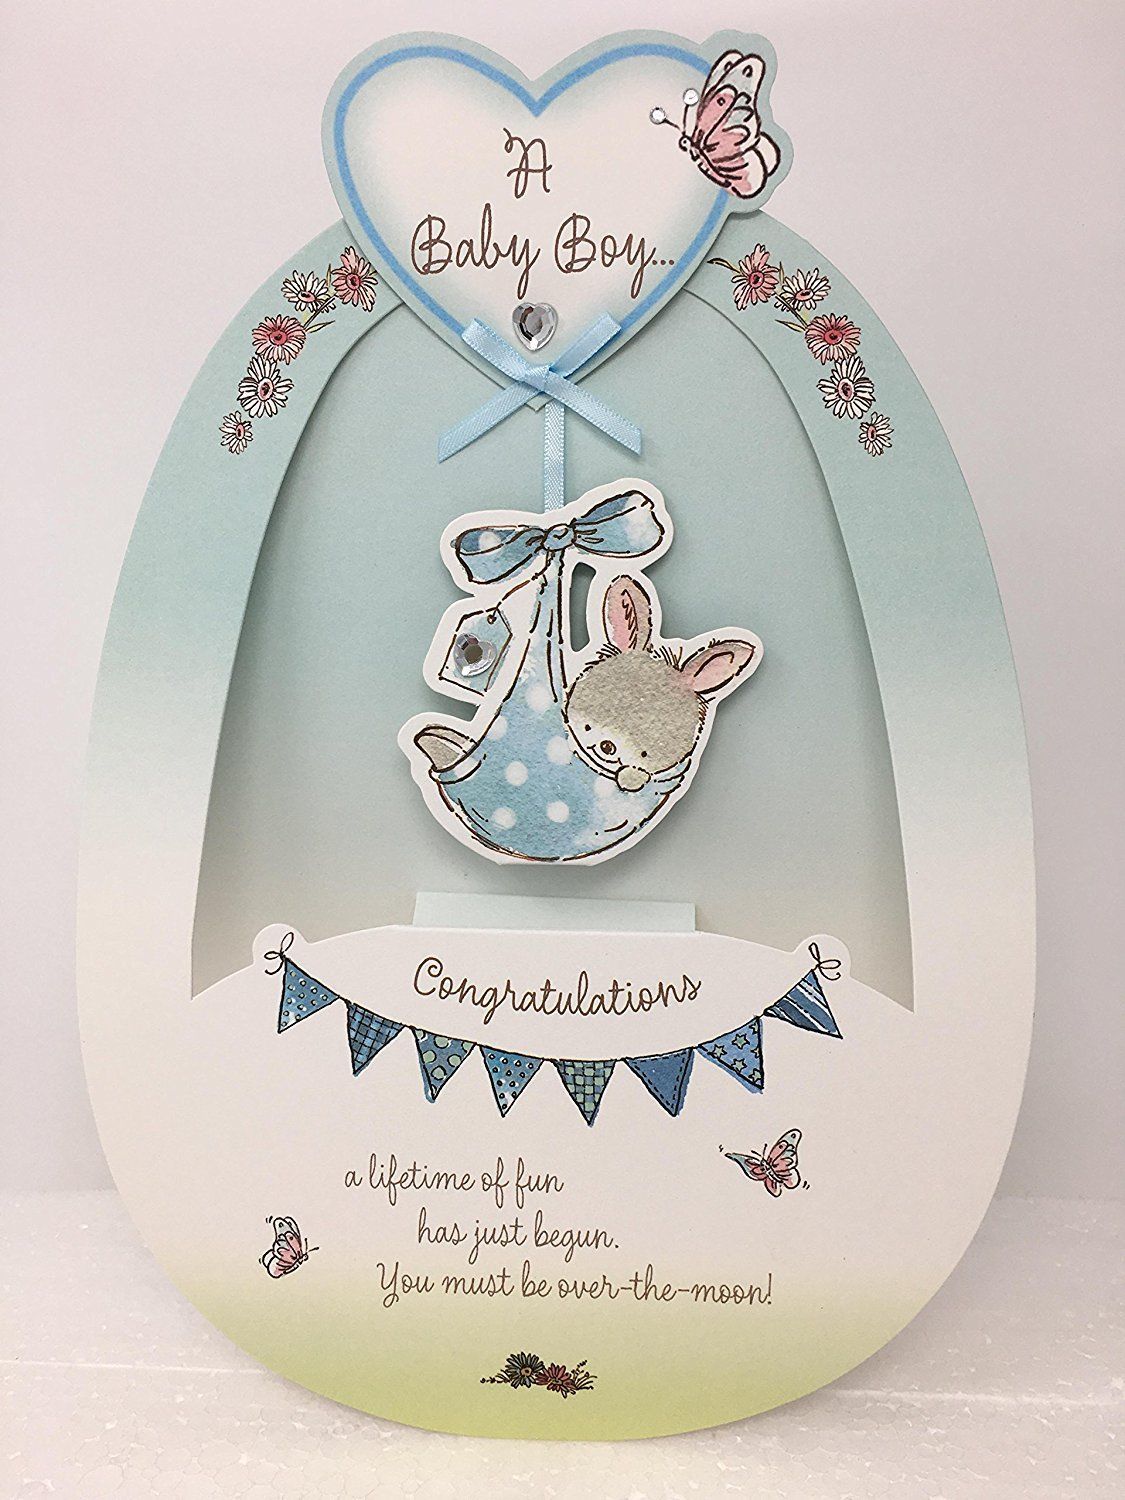 New Baby Boy Congratulations 3D Swing Card